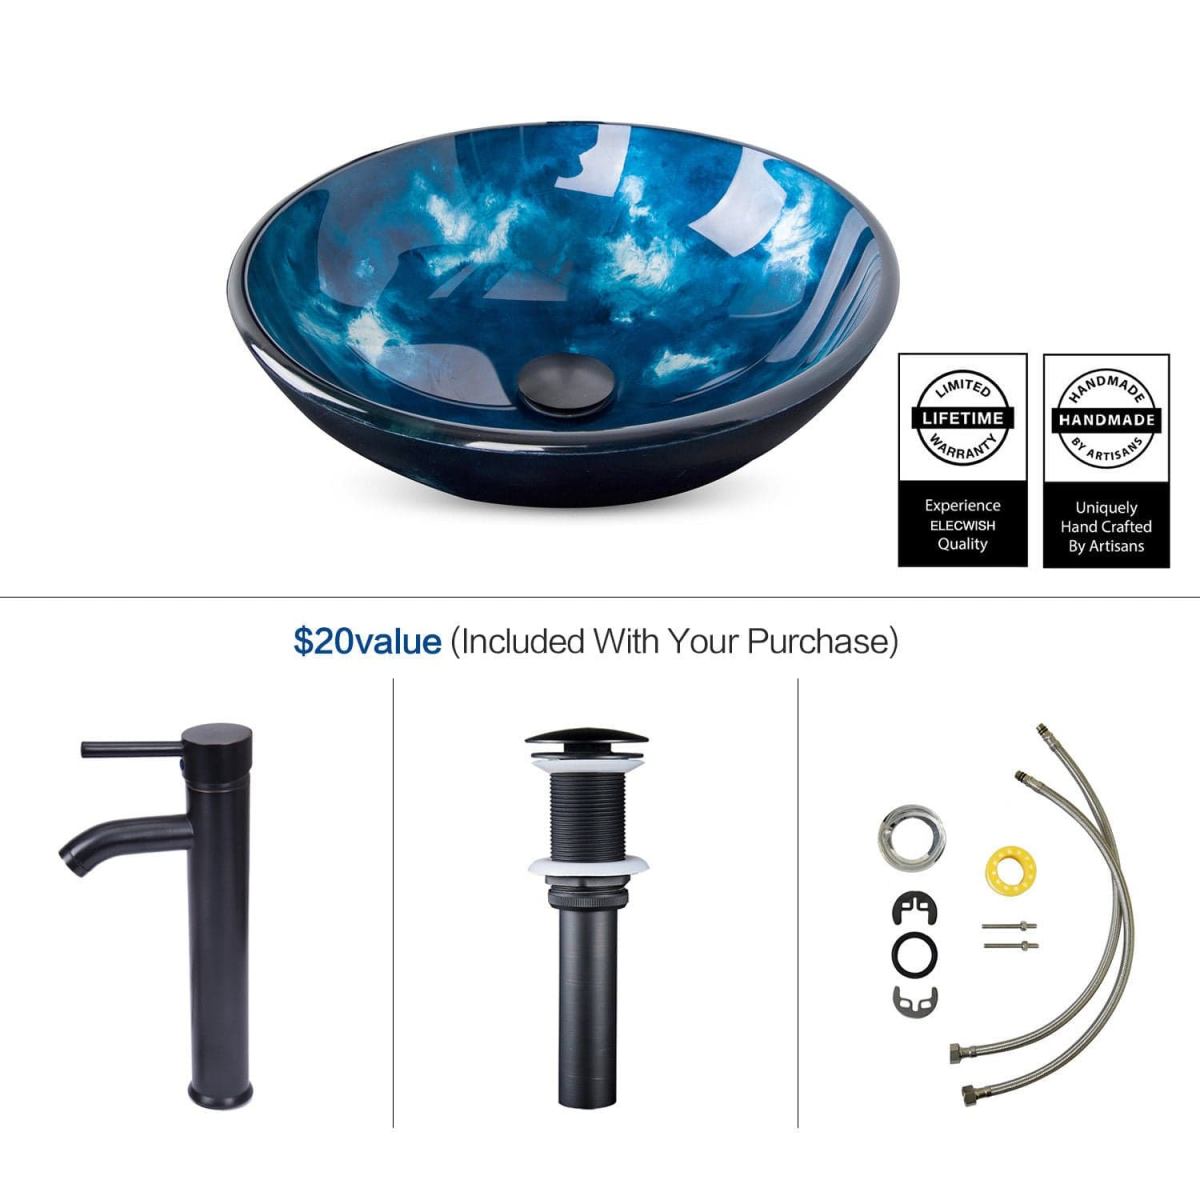 Elecwish ocean blue round sink package included displays